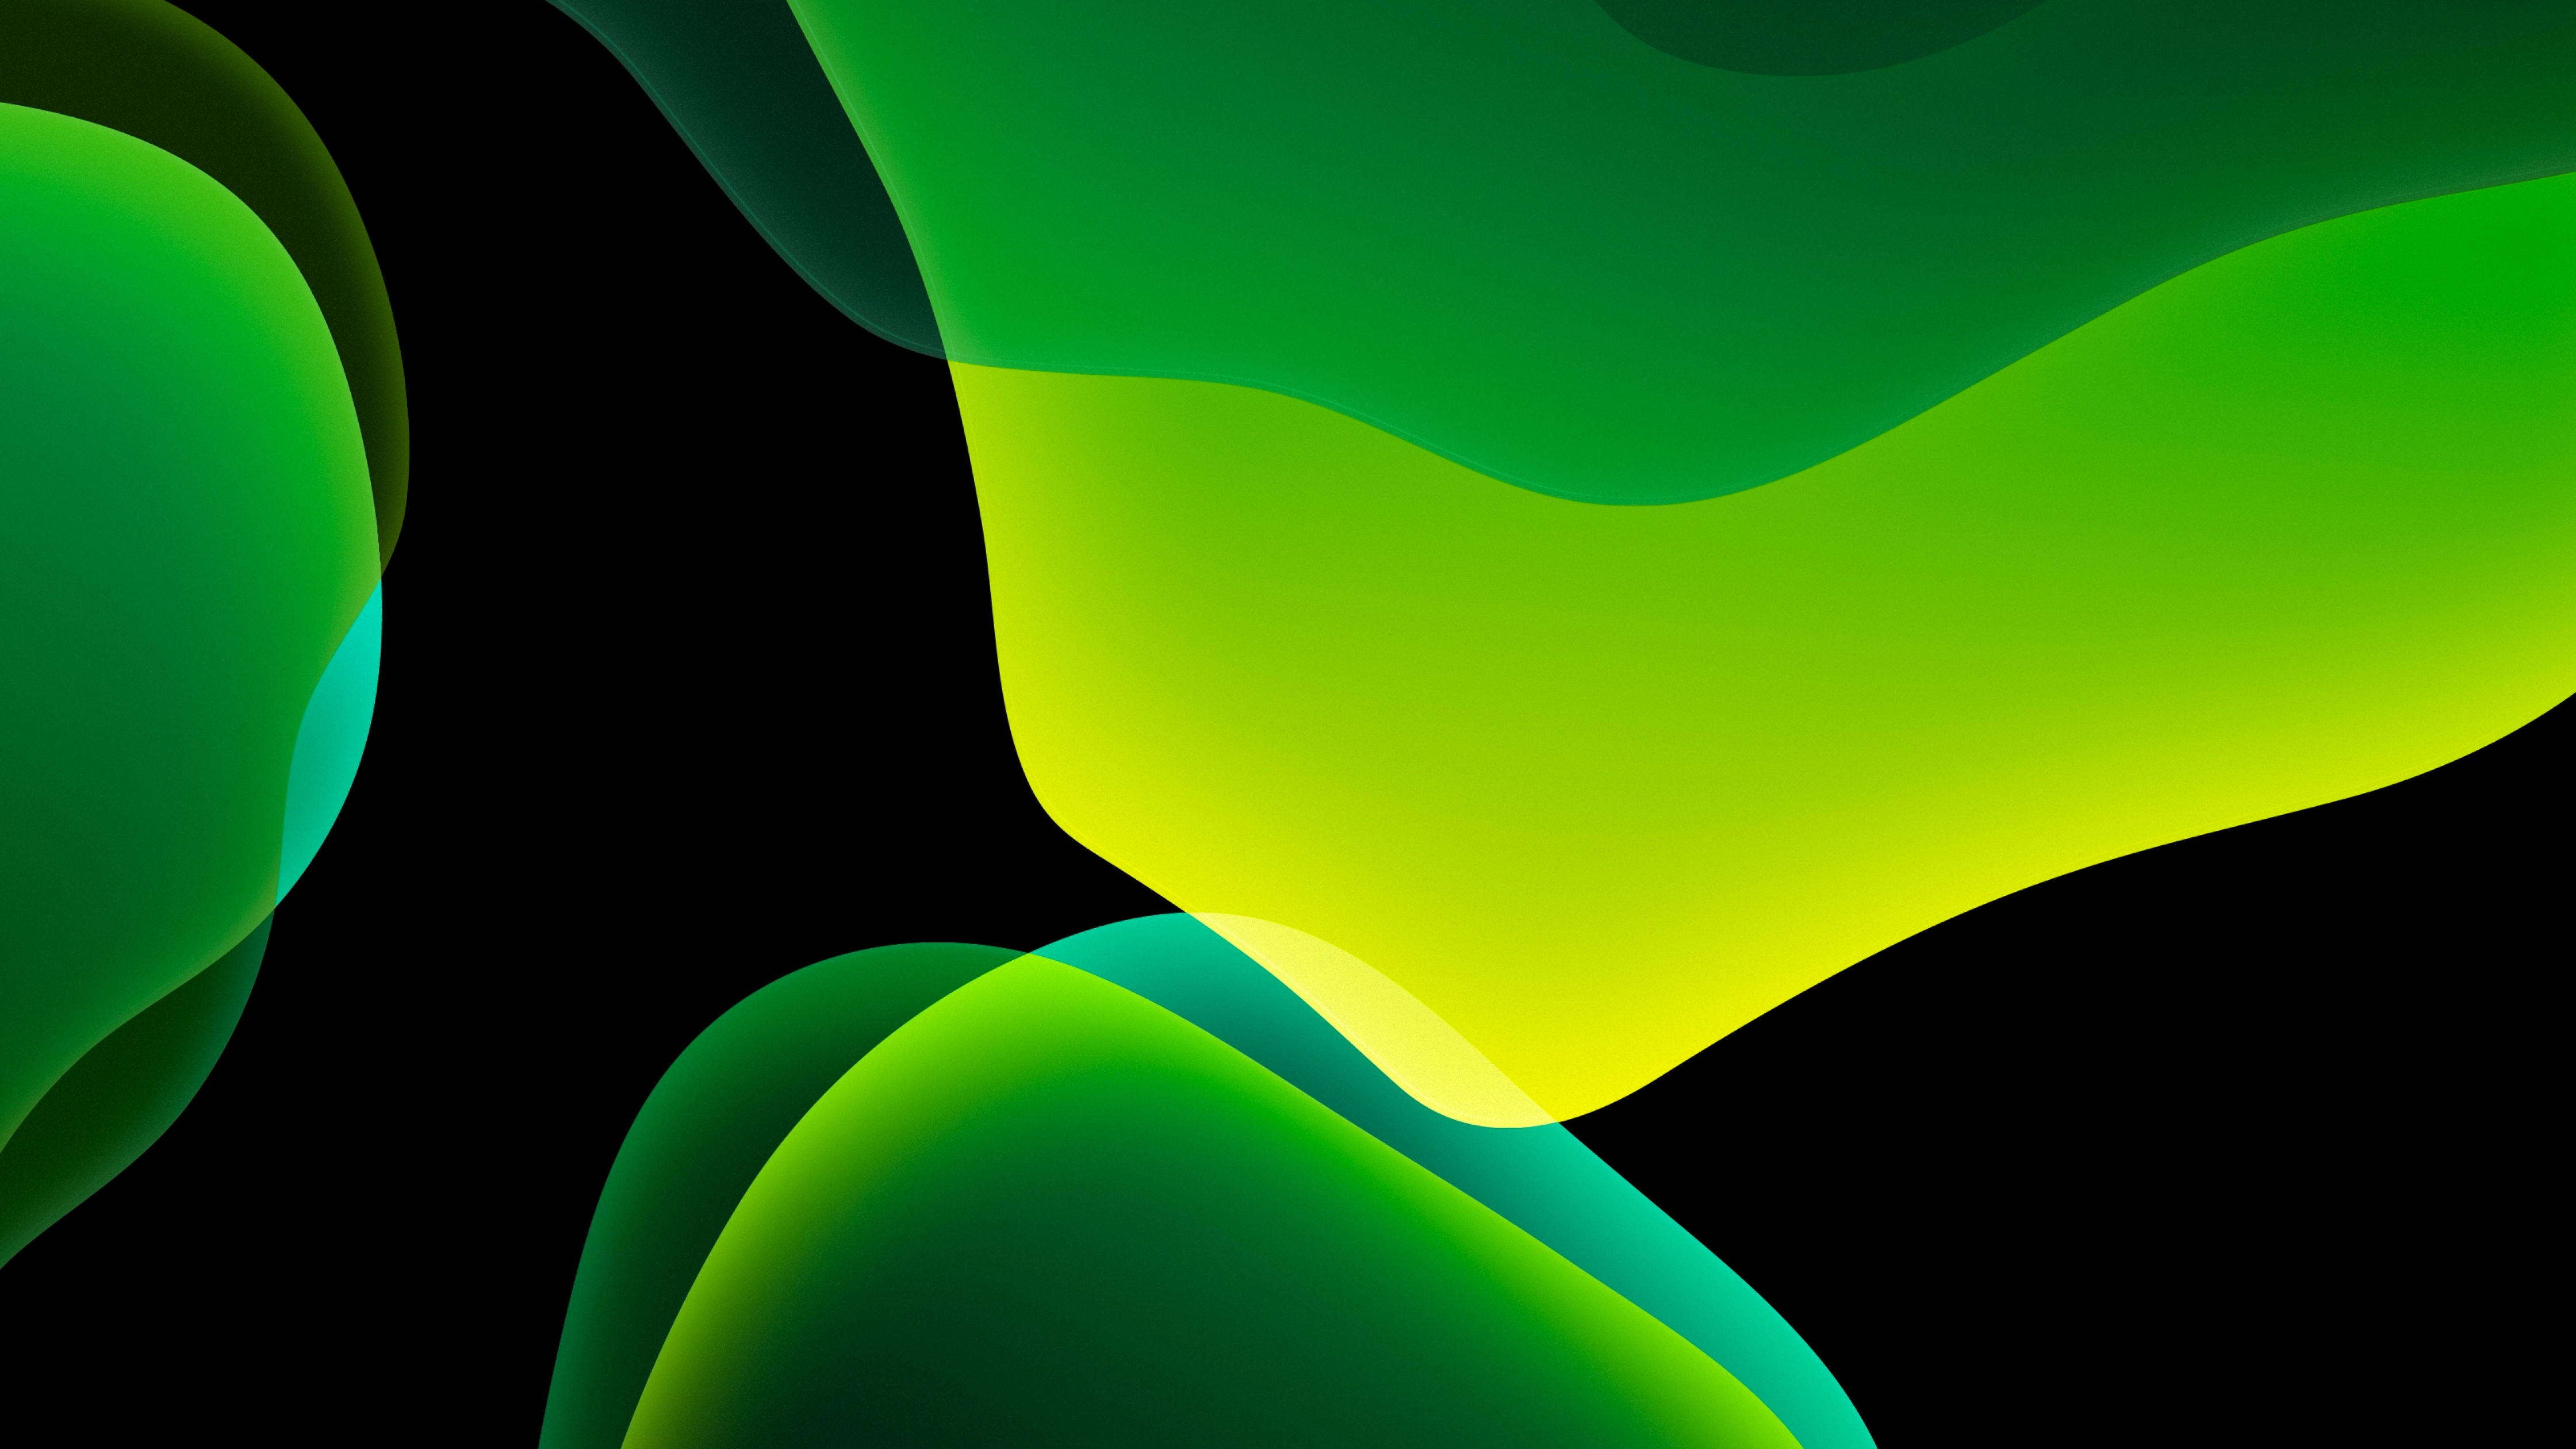 iOS 13 Wallpaper 4K, Stock, iPadOS, Green, Black background, AMOLED, Abstract